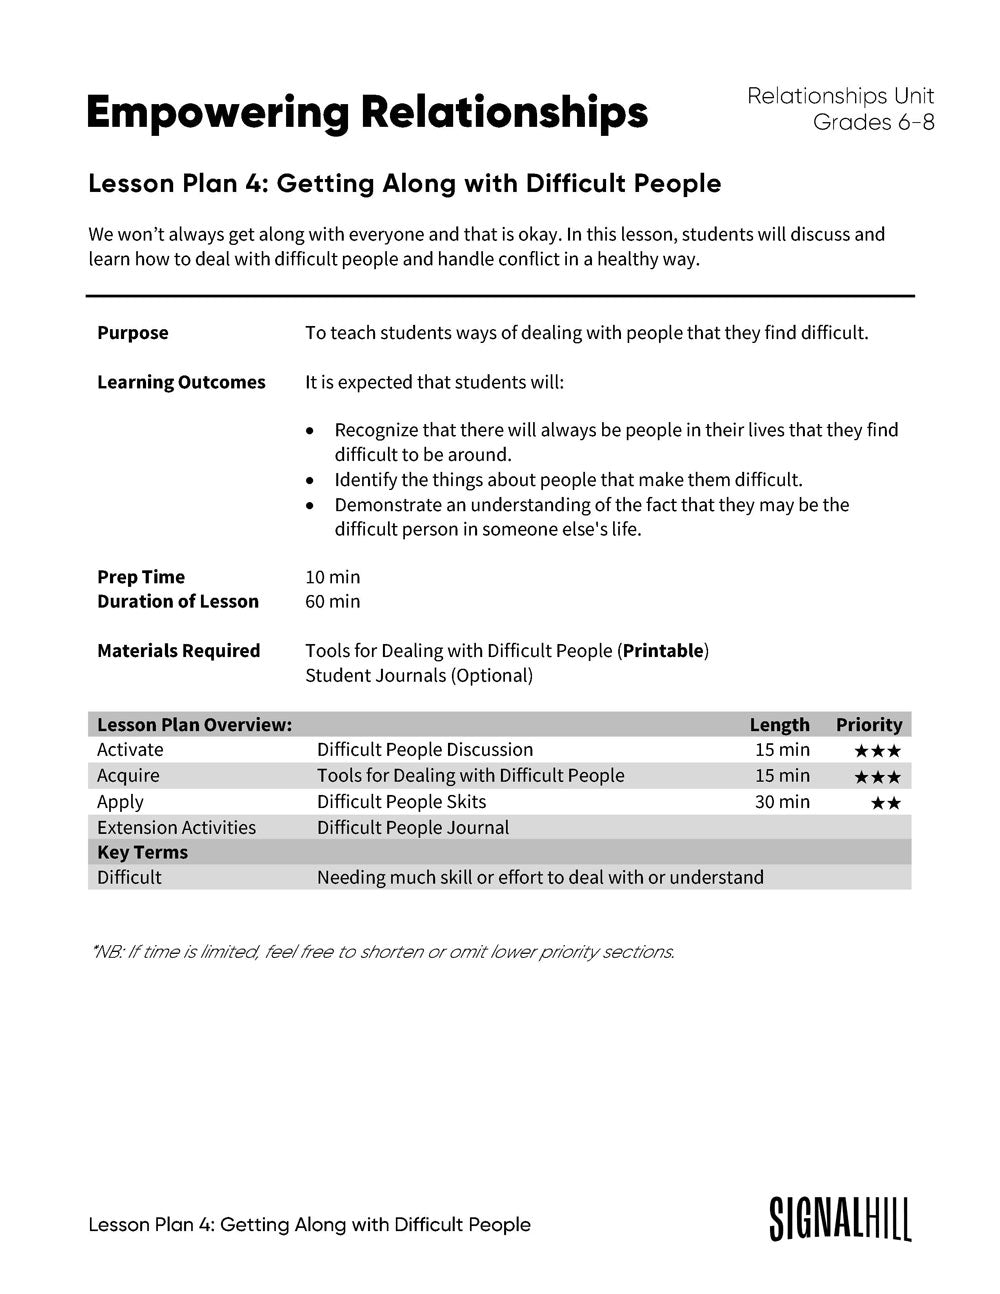 Empowering Relationships - Lesson Plan Bundle (4 Lesson Plans)